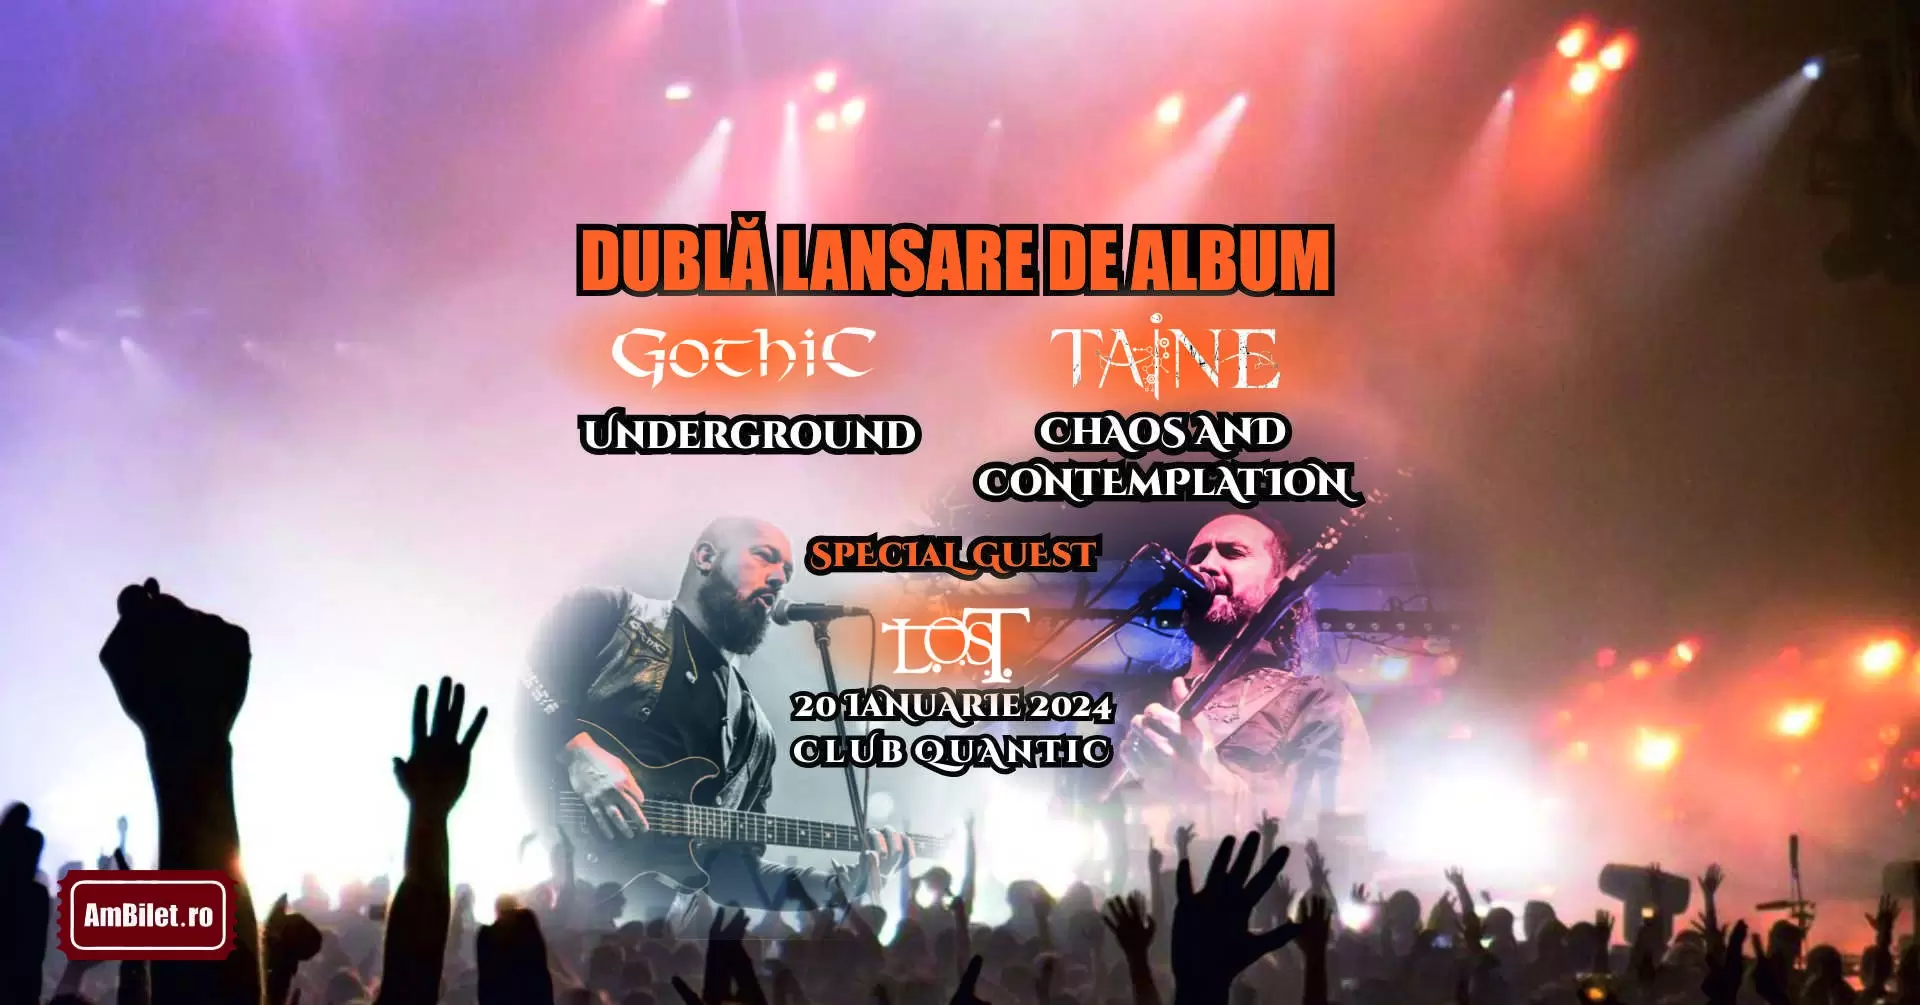 Cronică de concert concert Taine, Gothic și L.O.S.T. - Dubla lansare de album - în club Quantic